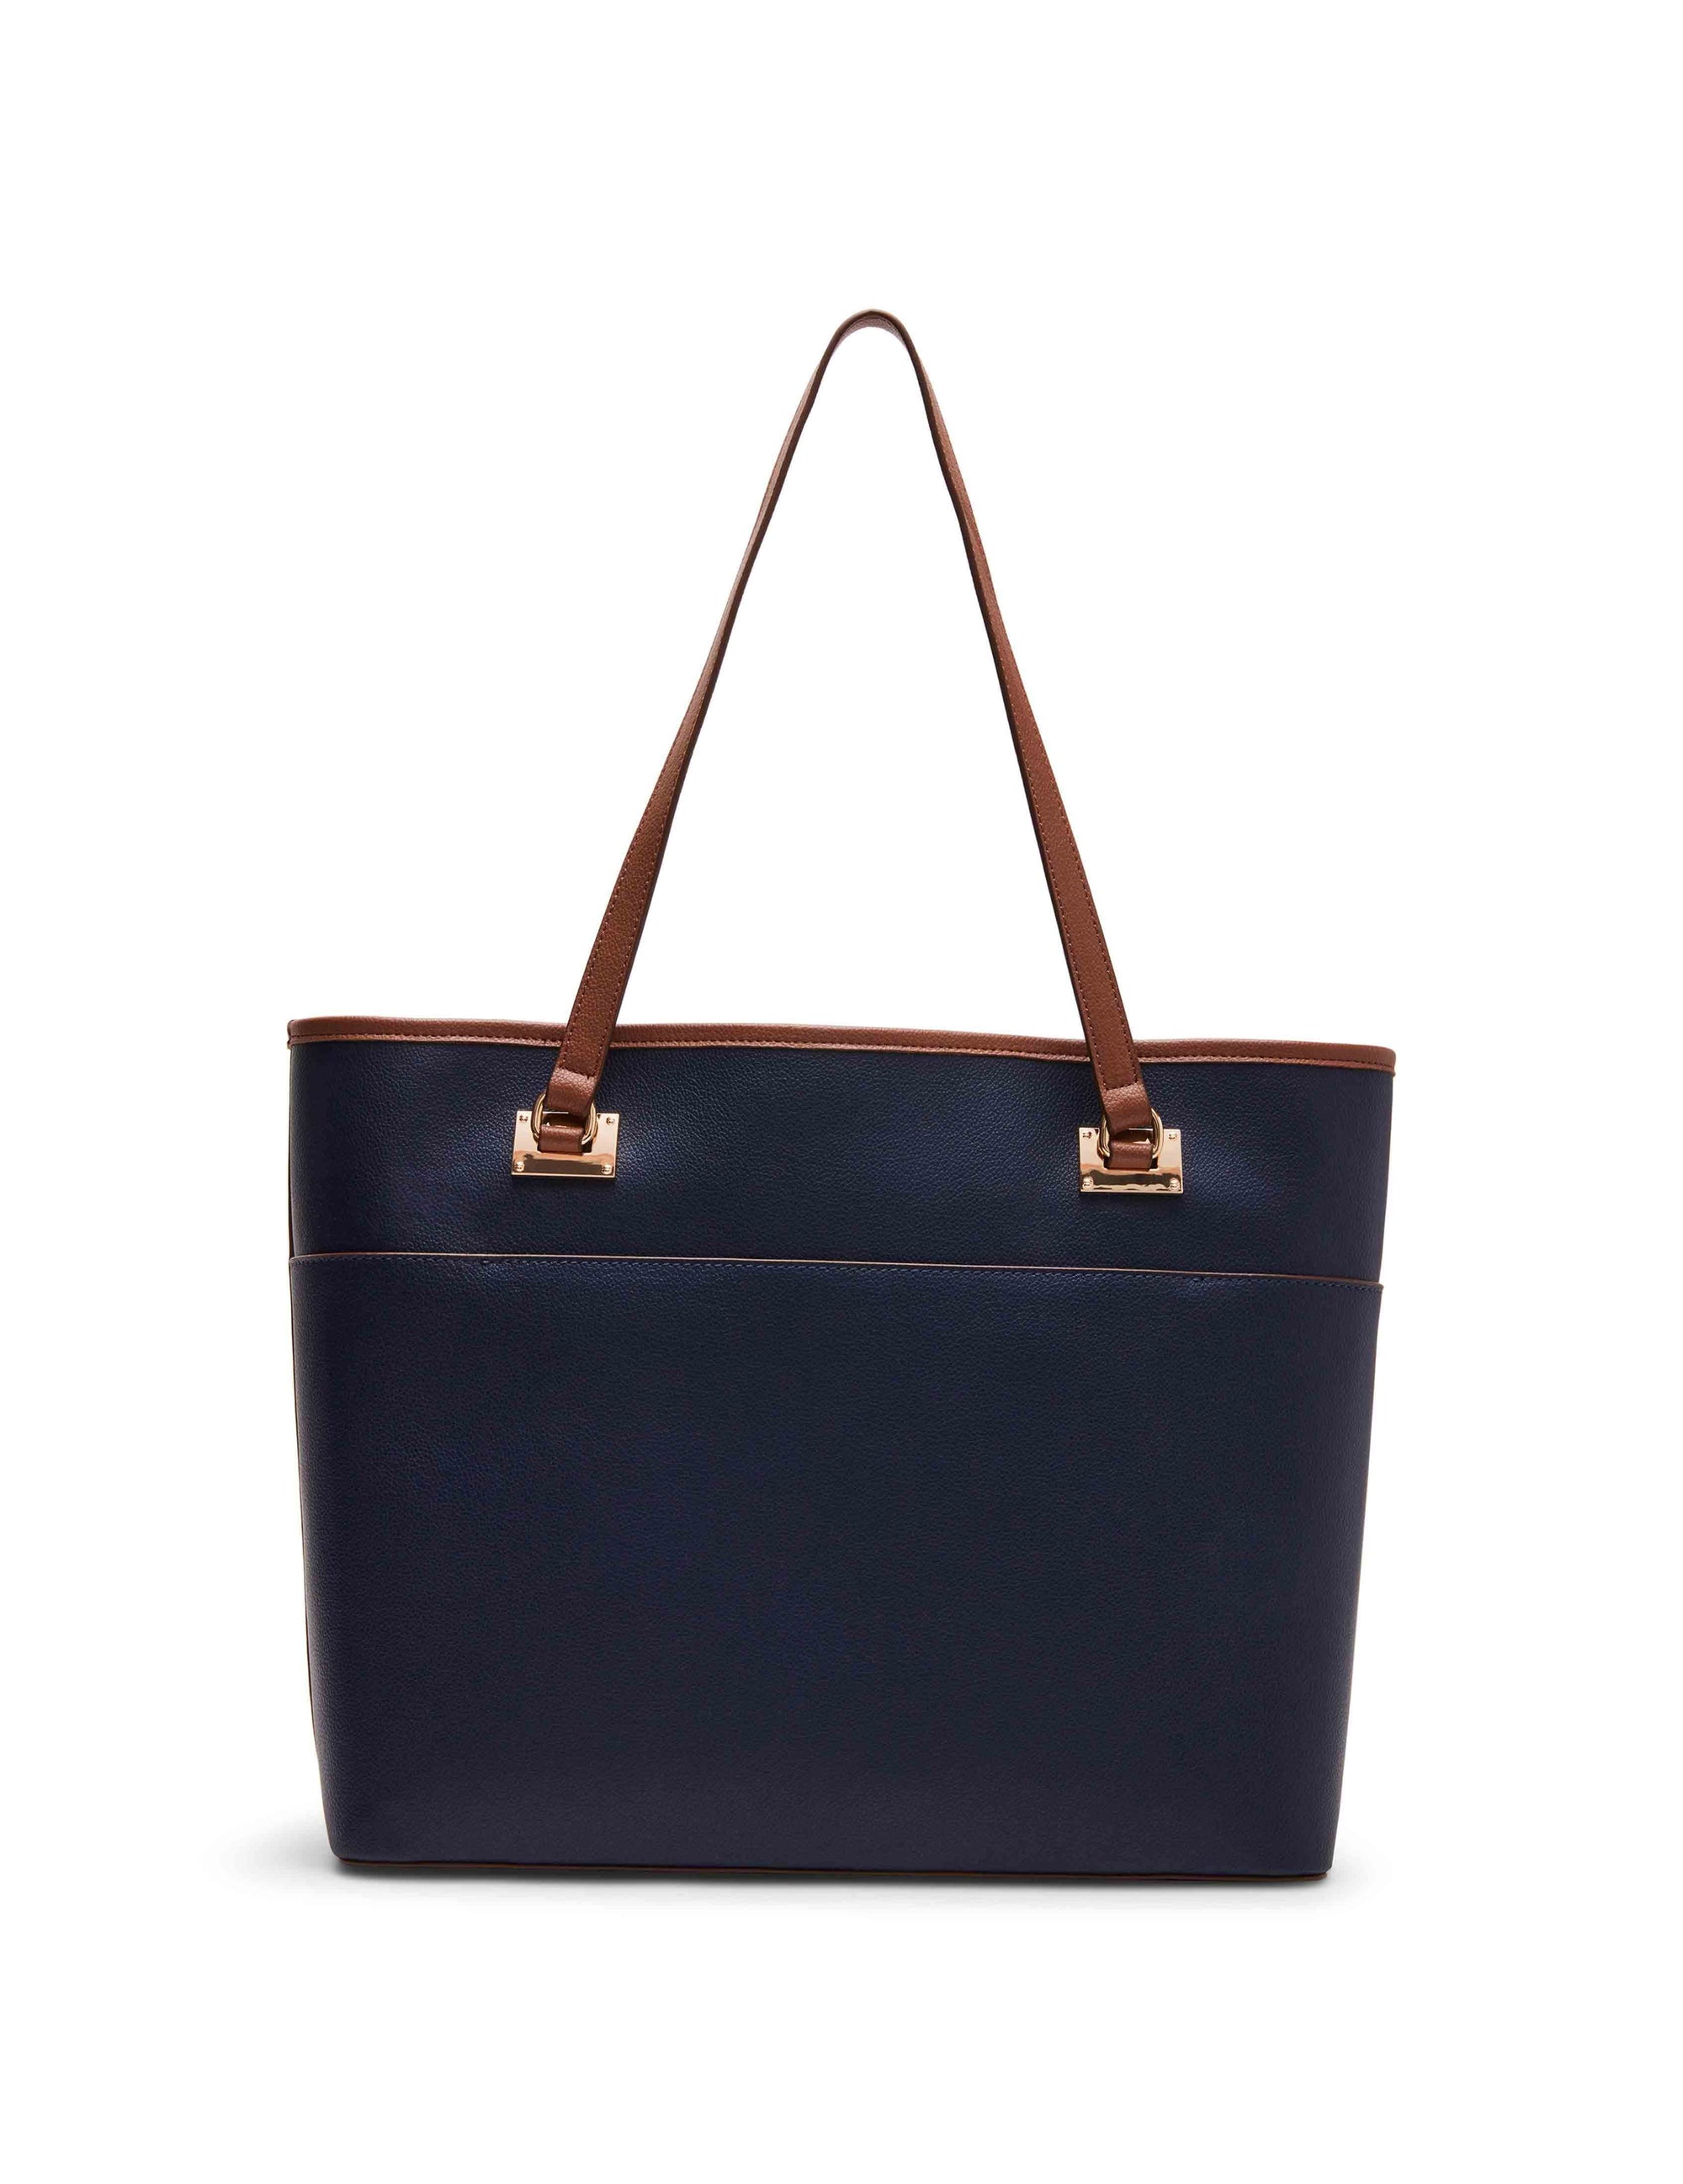 Desigual Accessories PU Hand Bag, Blue: Handbags: Amazon.com